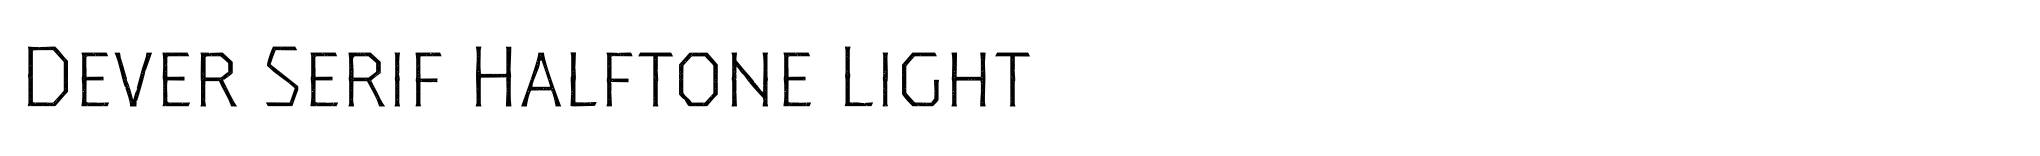 Dever Serif Halftone Light image